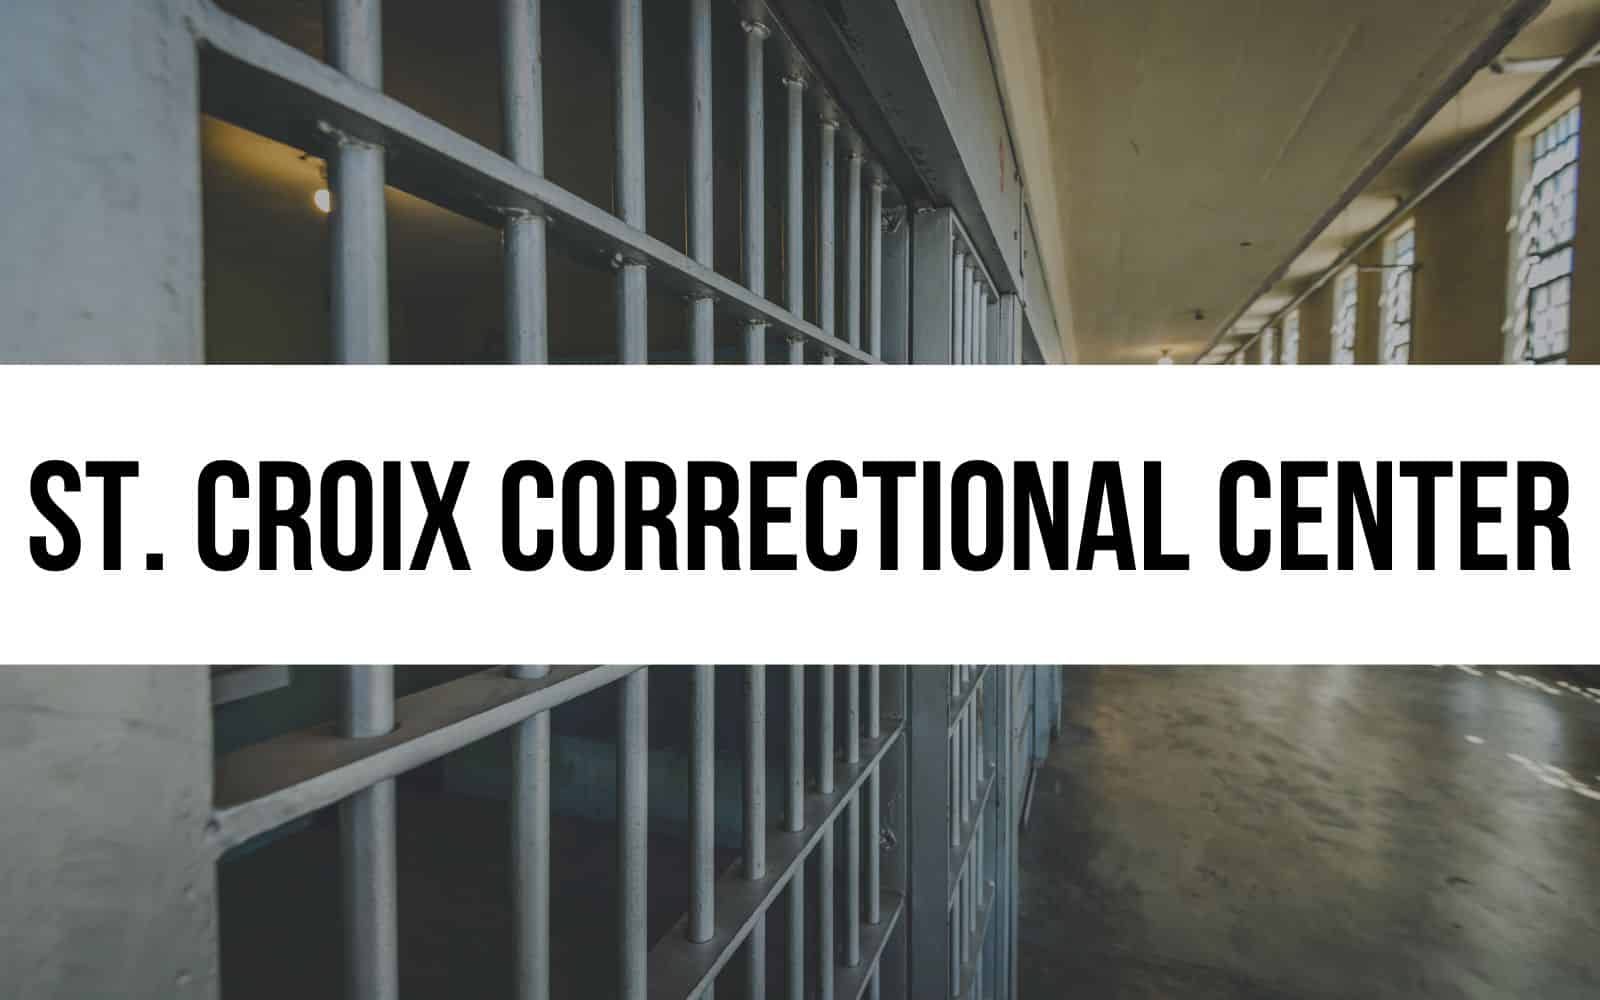 St. Croix Correctional Center